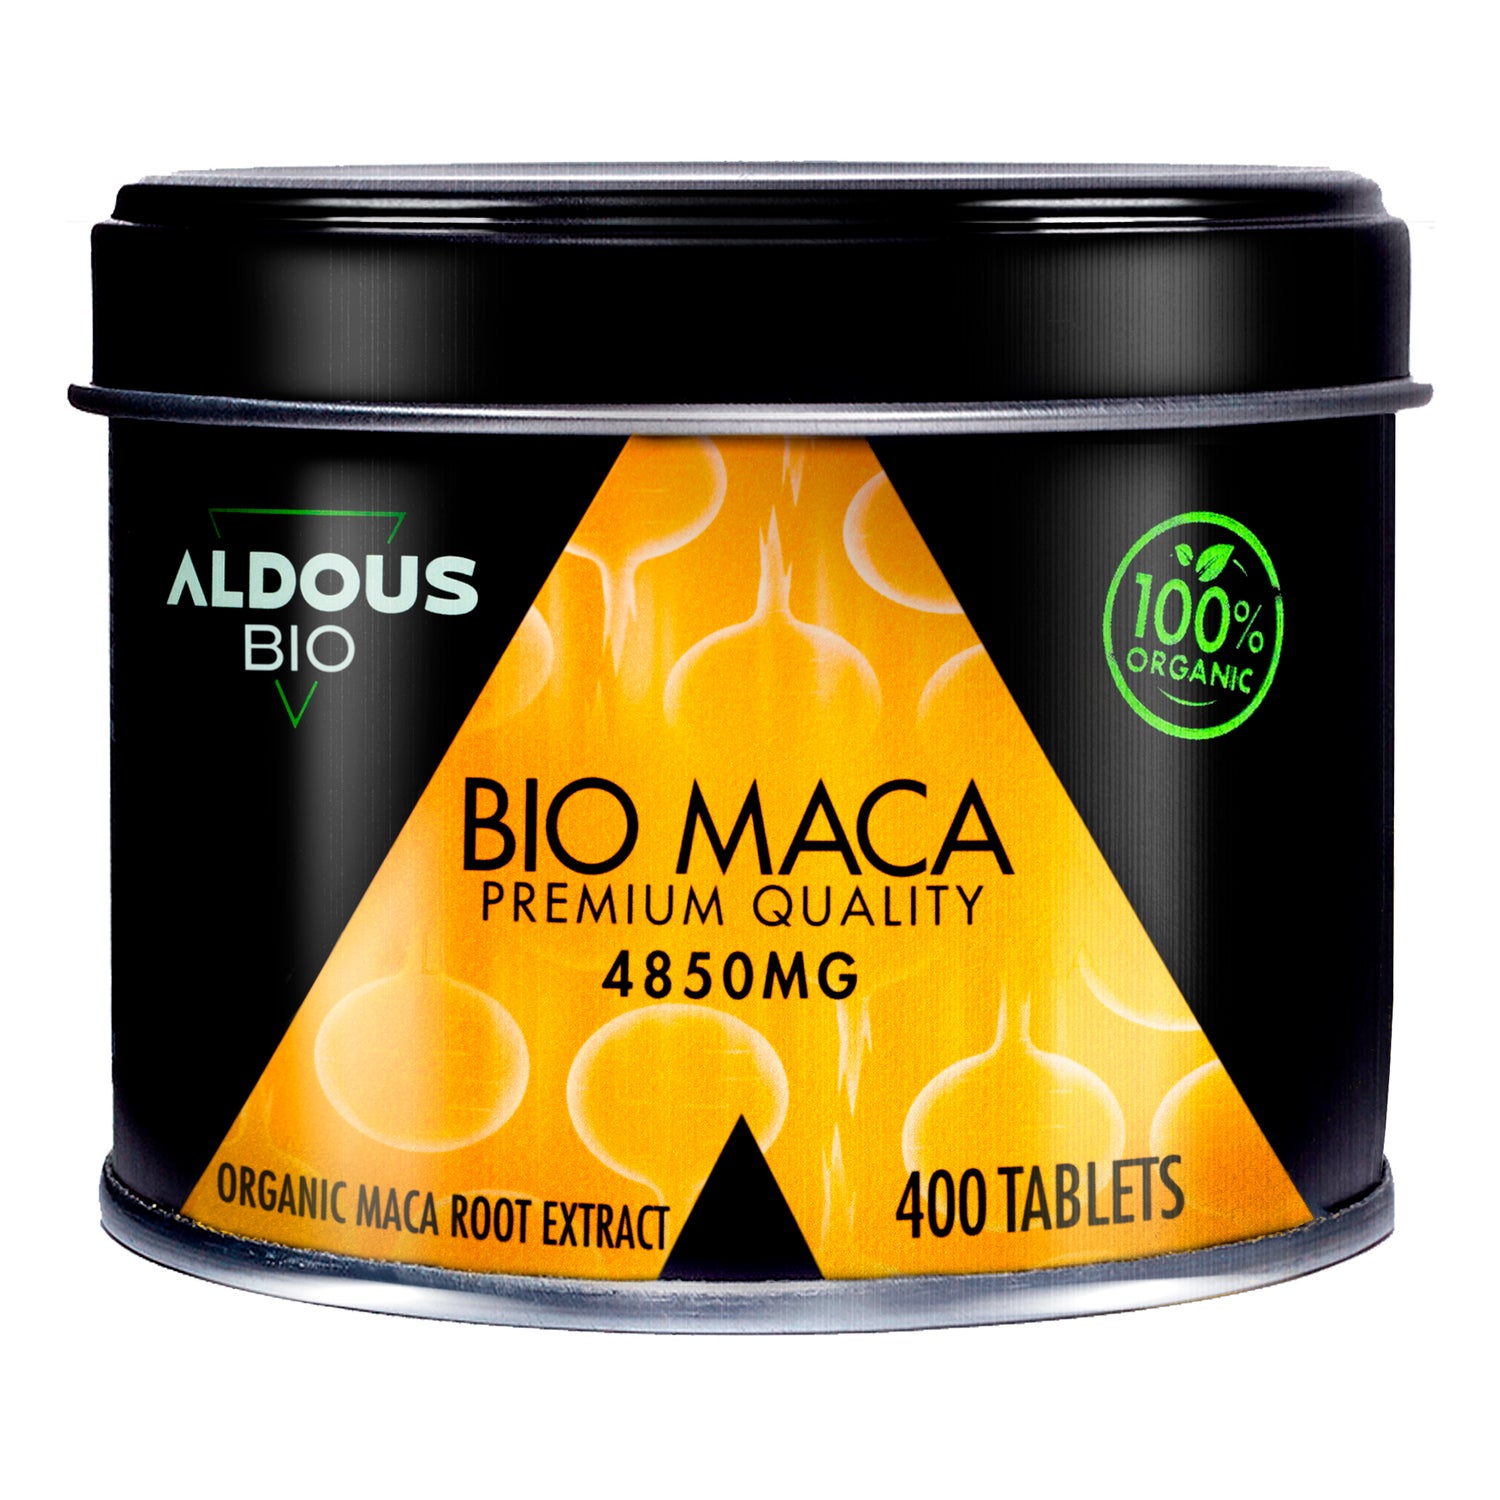 Aldous Bio Organic Andean Maca Extract 400tabs